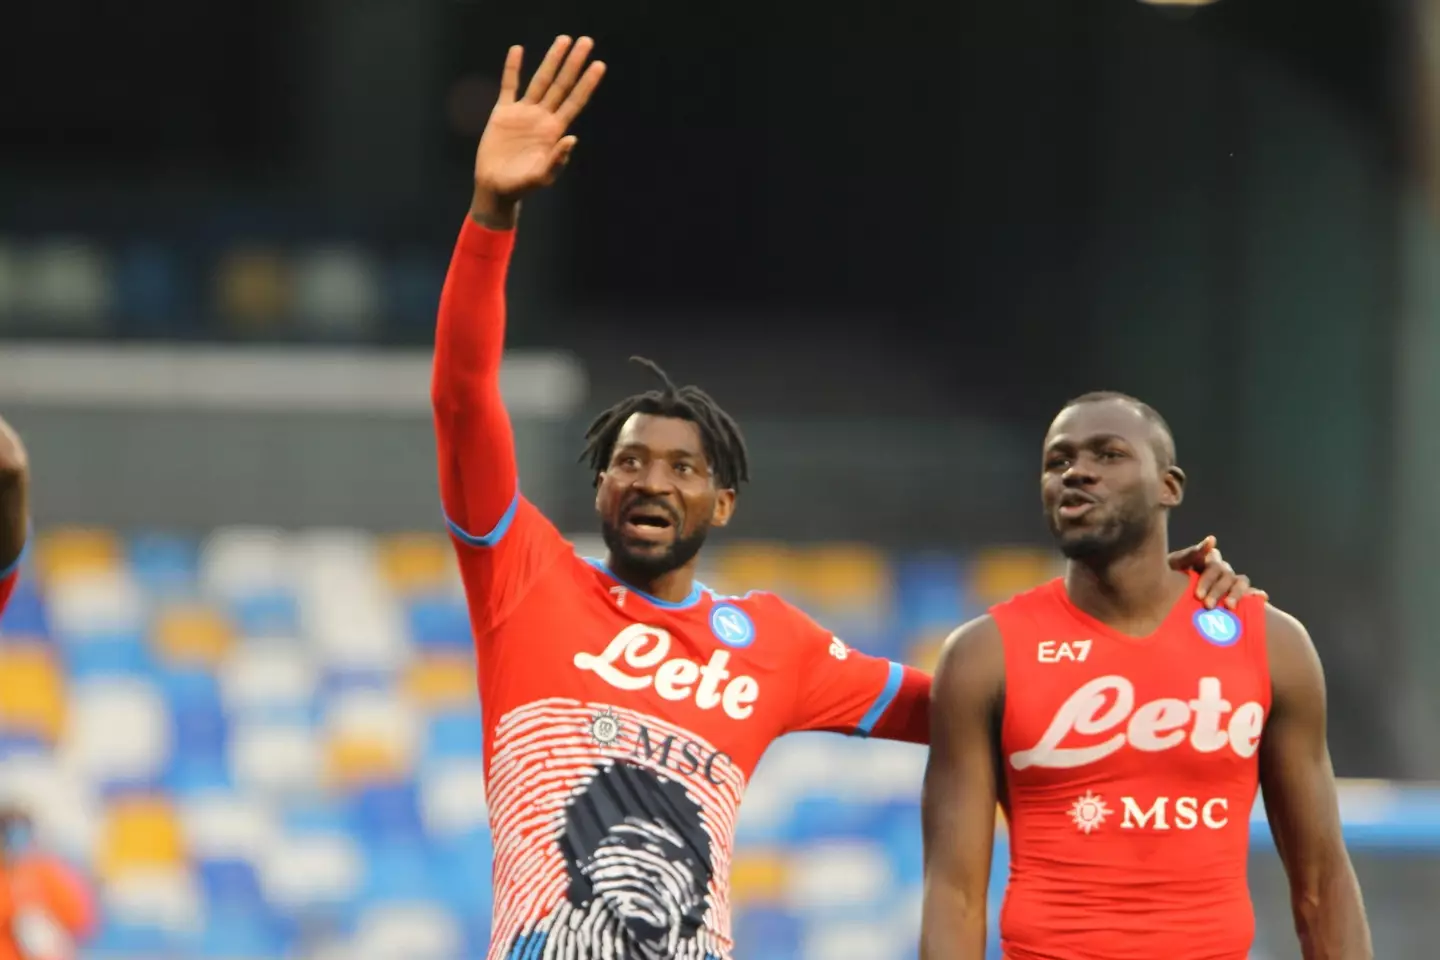 Zambo Anguissa and Koulibaly after a Napoli game. (Image